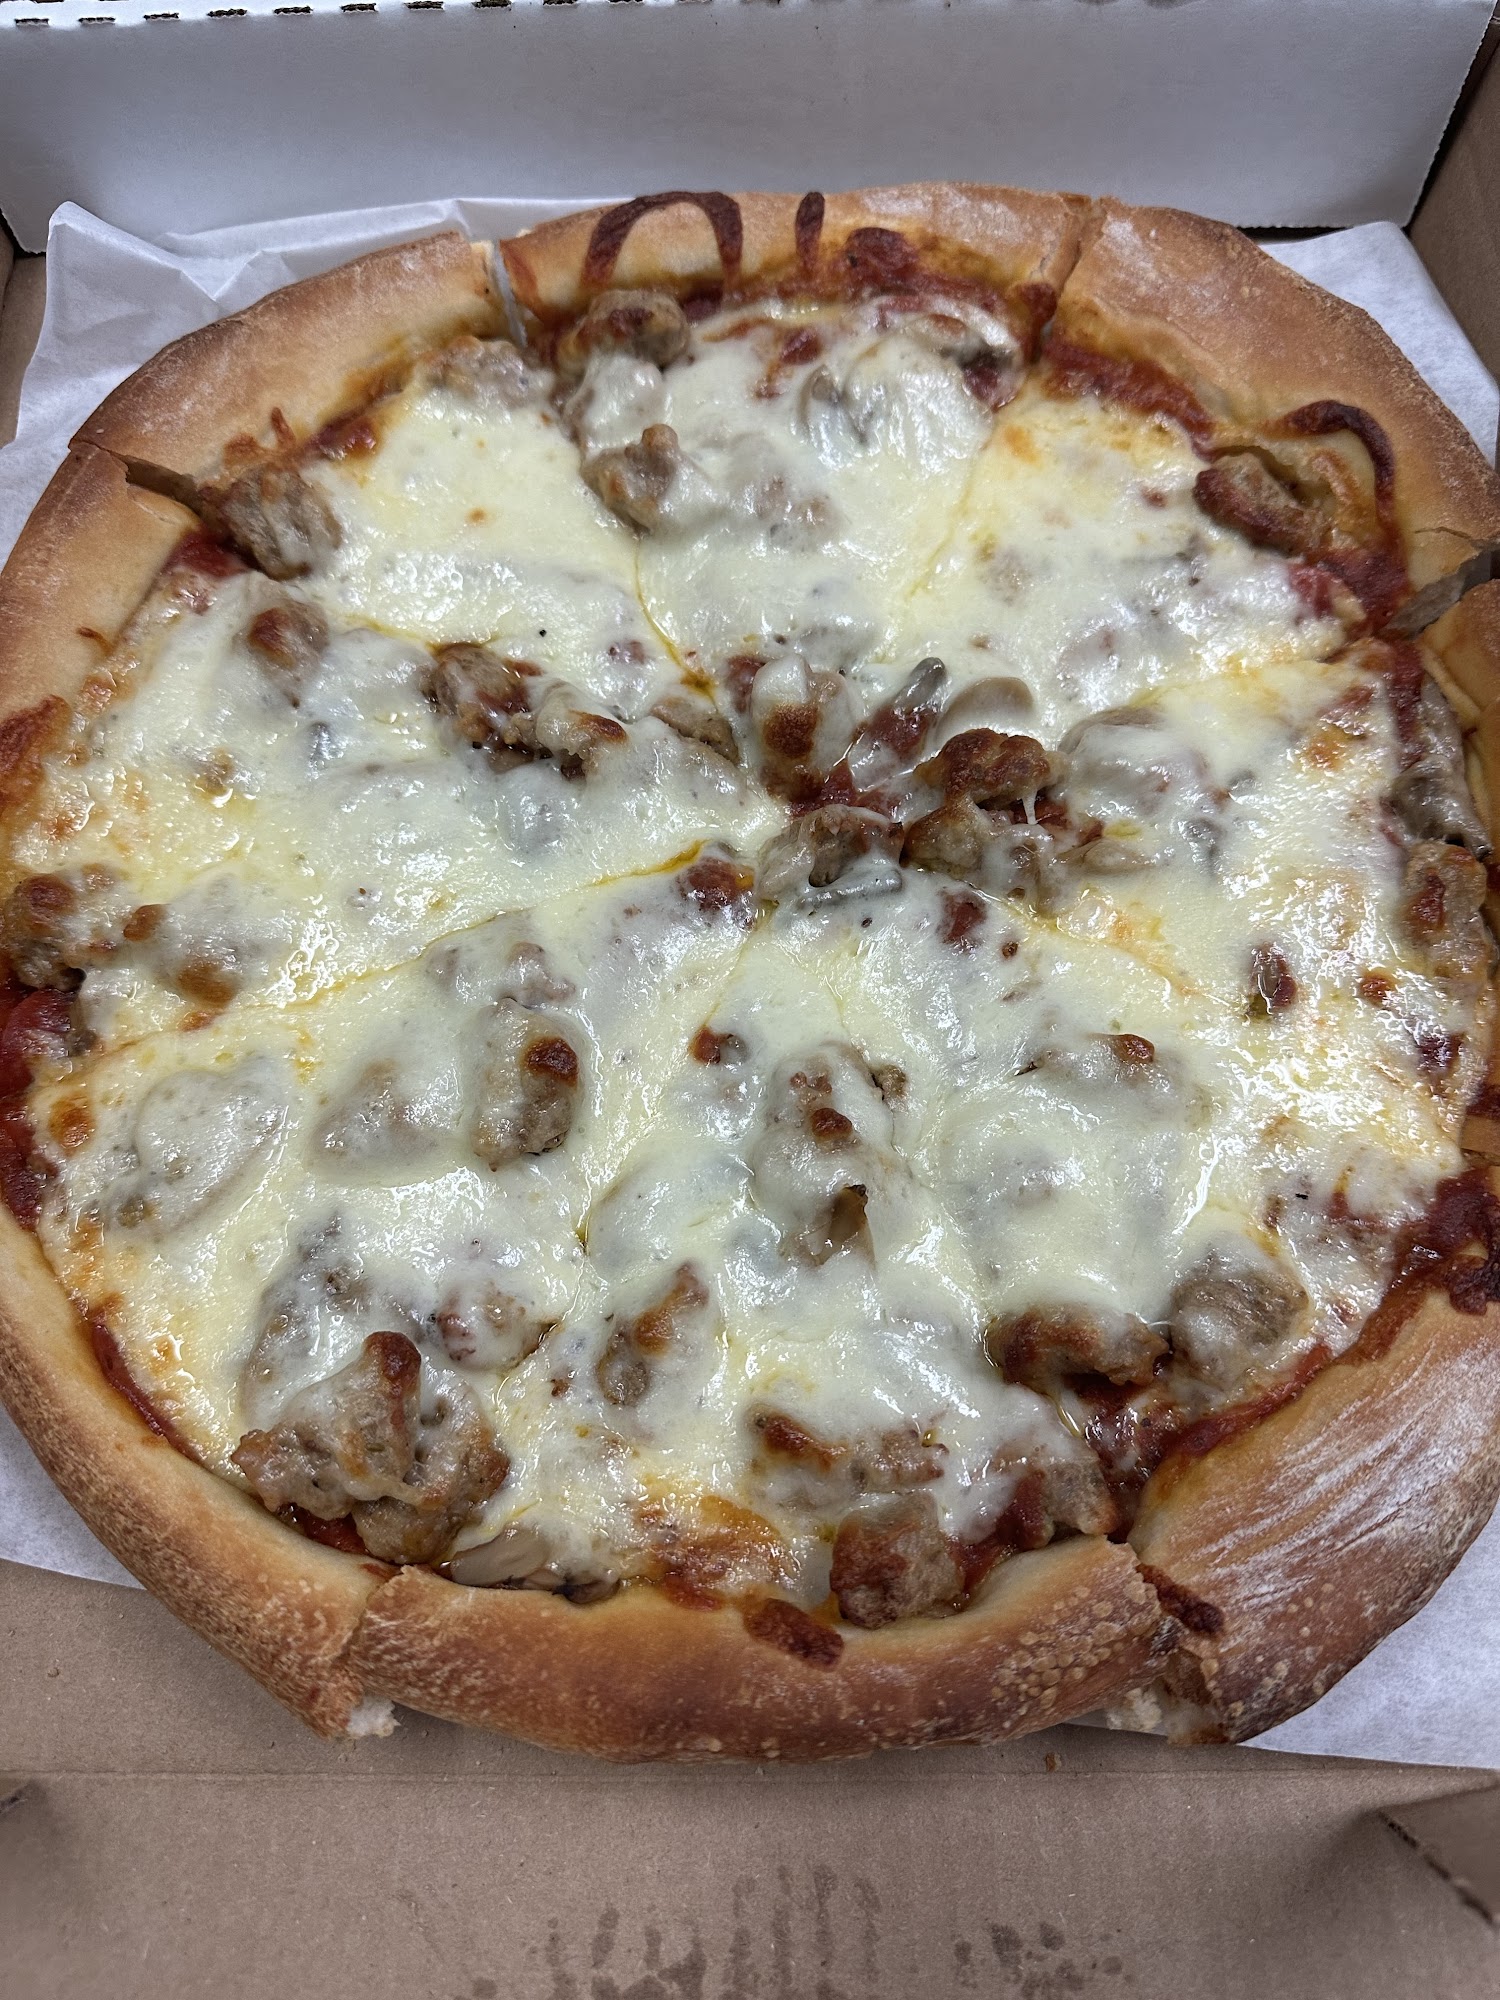 Teresa's Pizza-Twinsburg